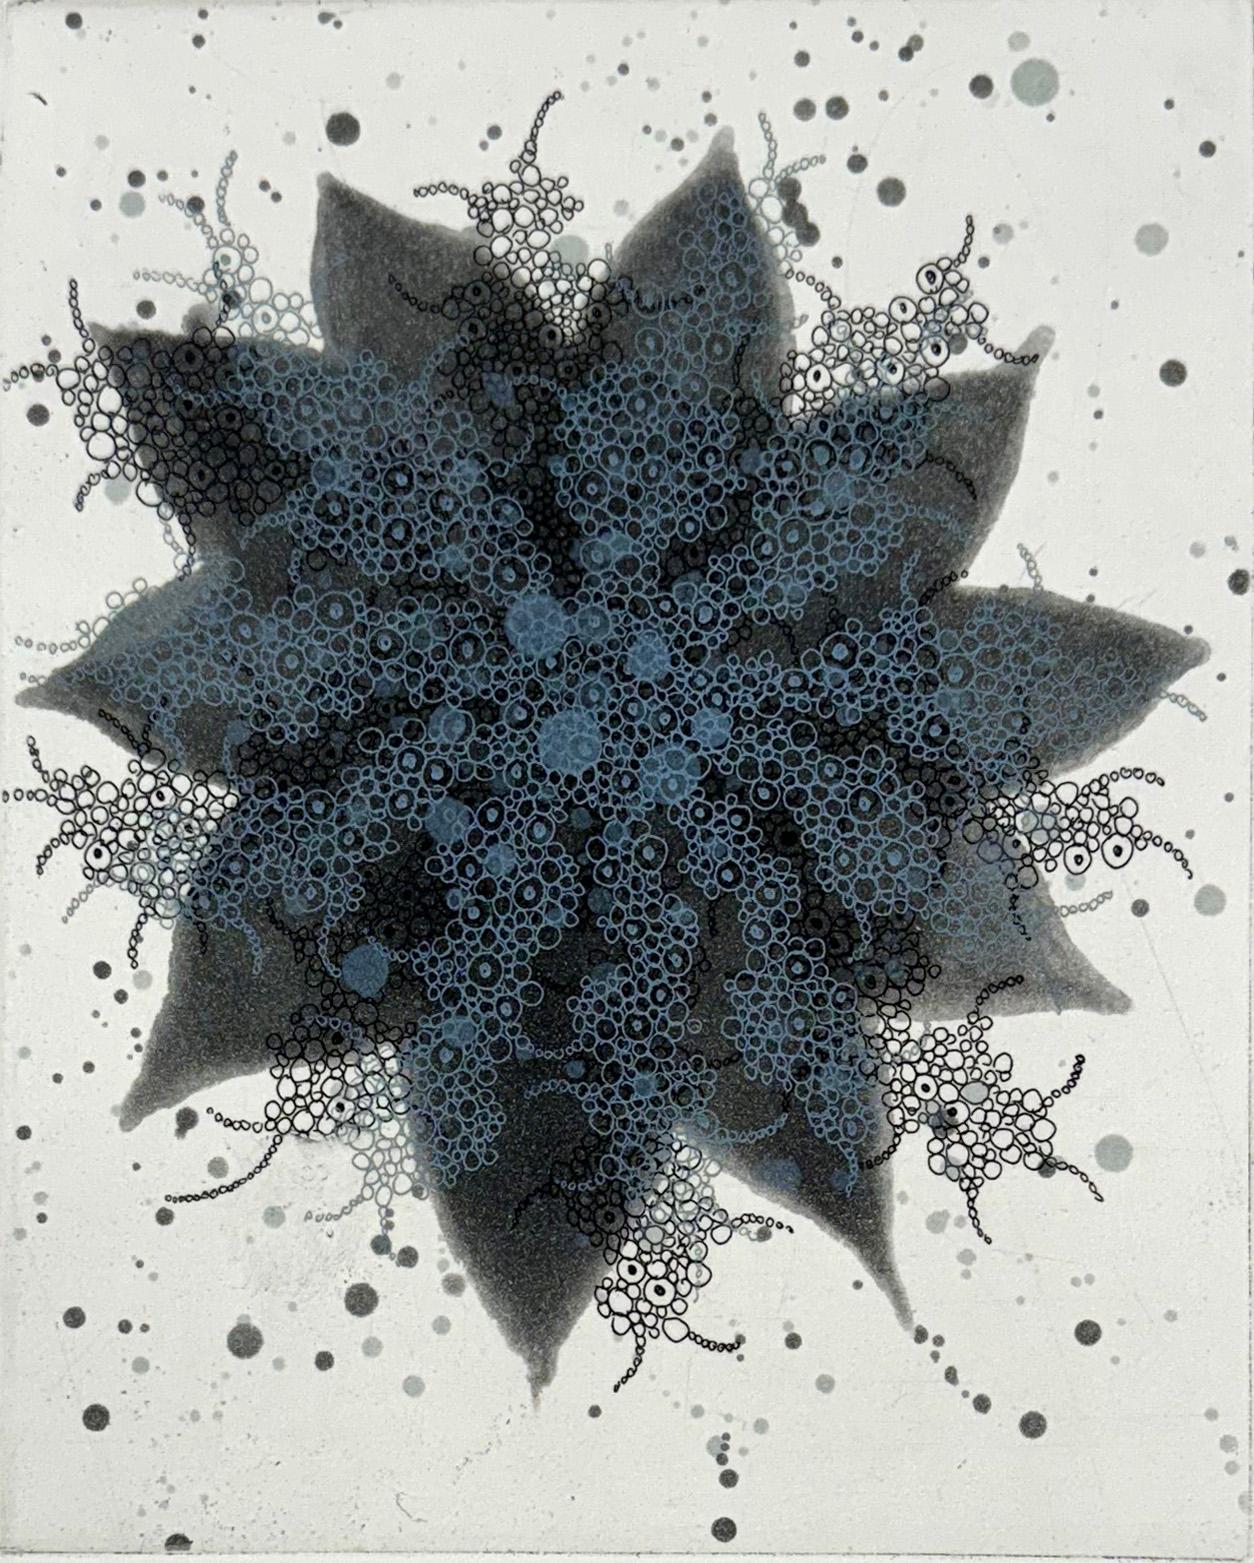 Seiko Tachibana Abstract Print - fern-butterfly effect  b-5